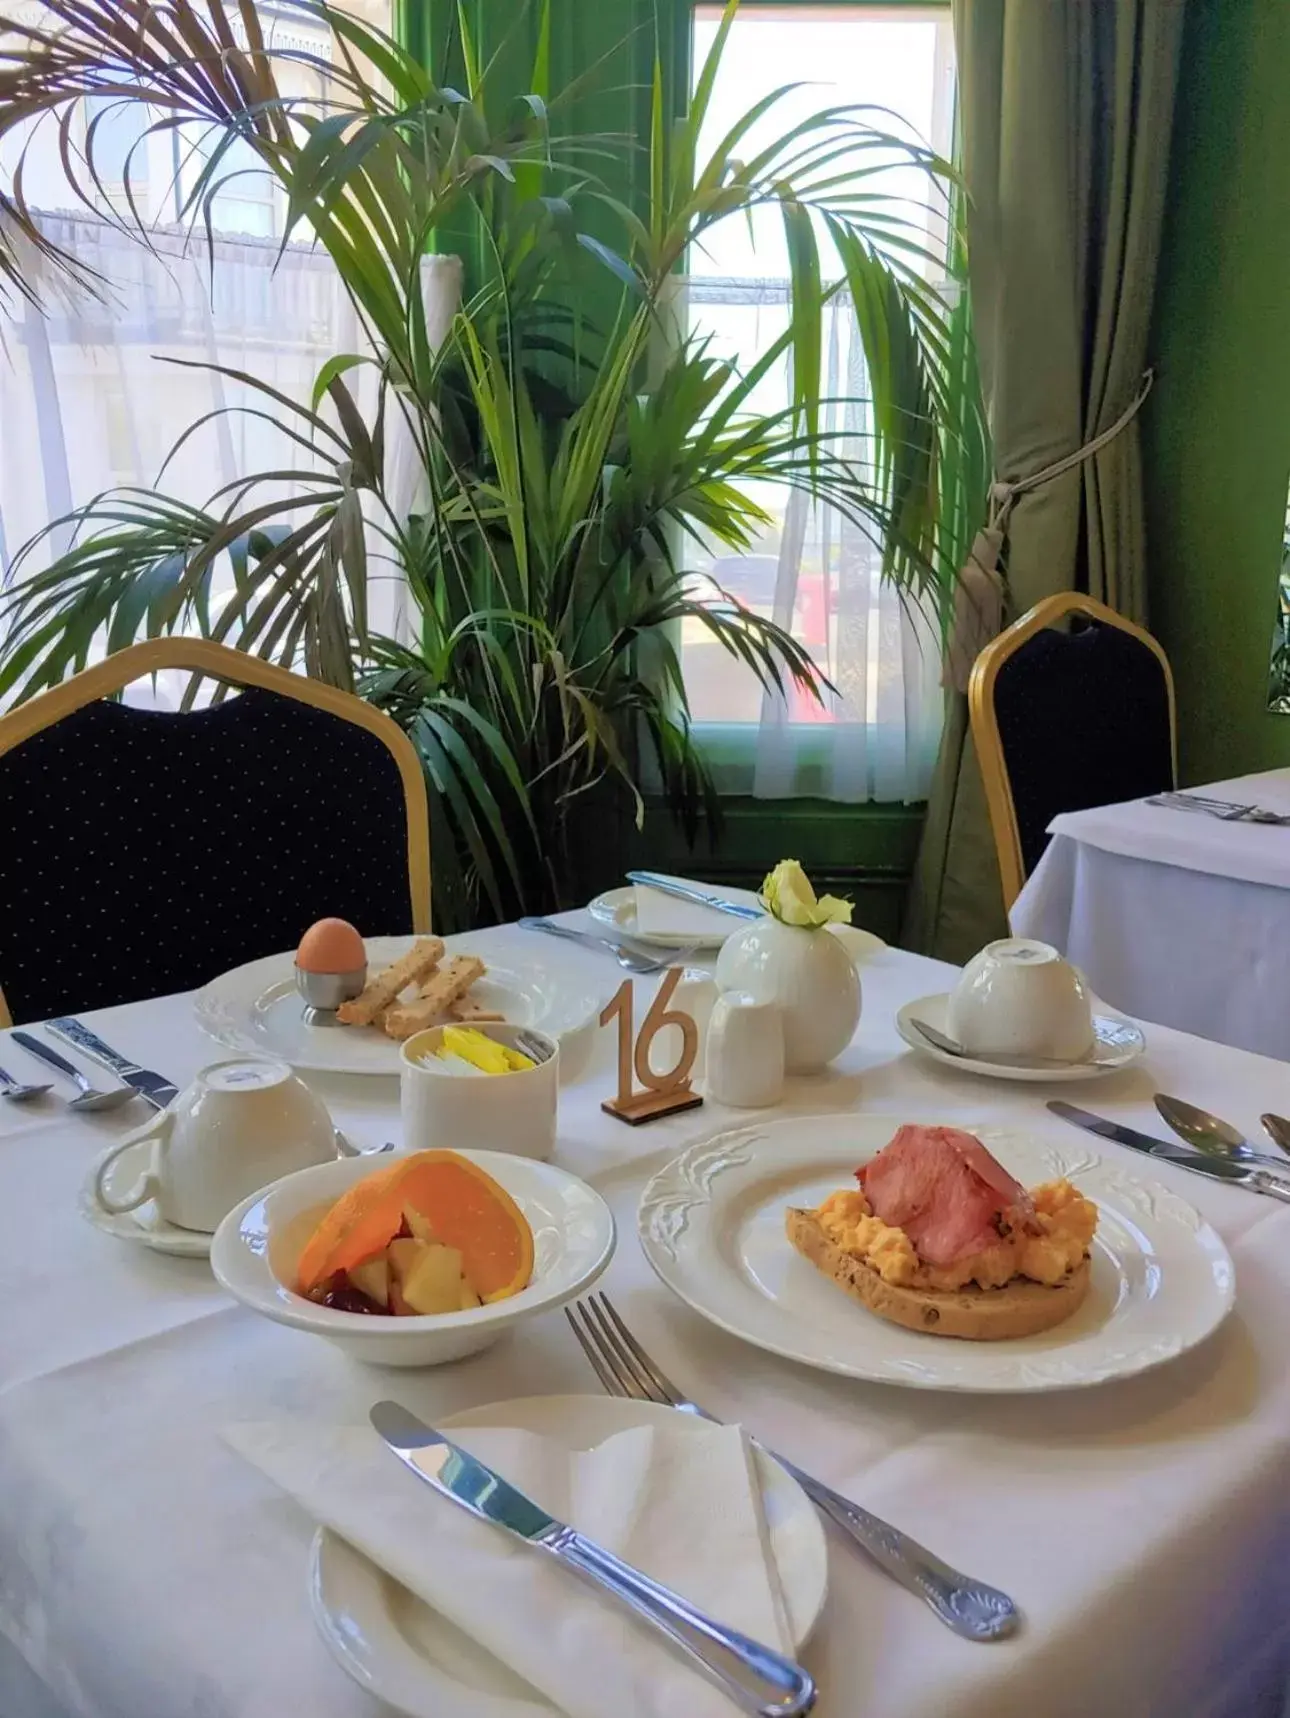 Breakfast in The Chatsworth Hotel